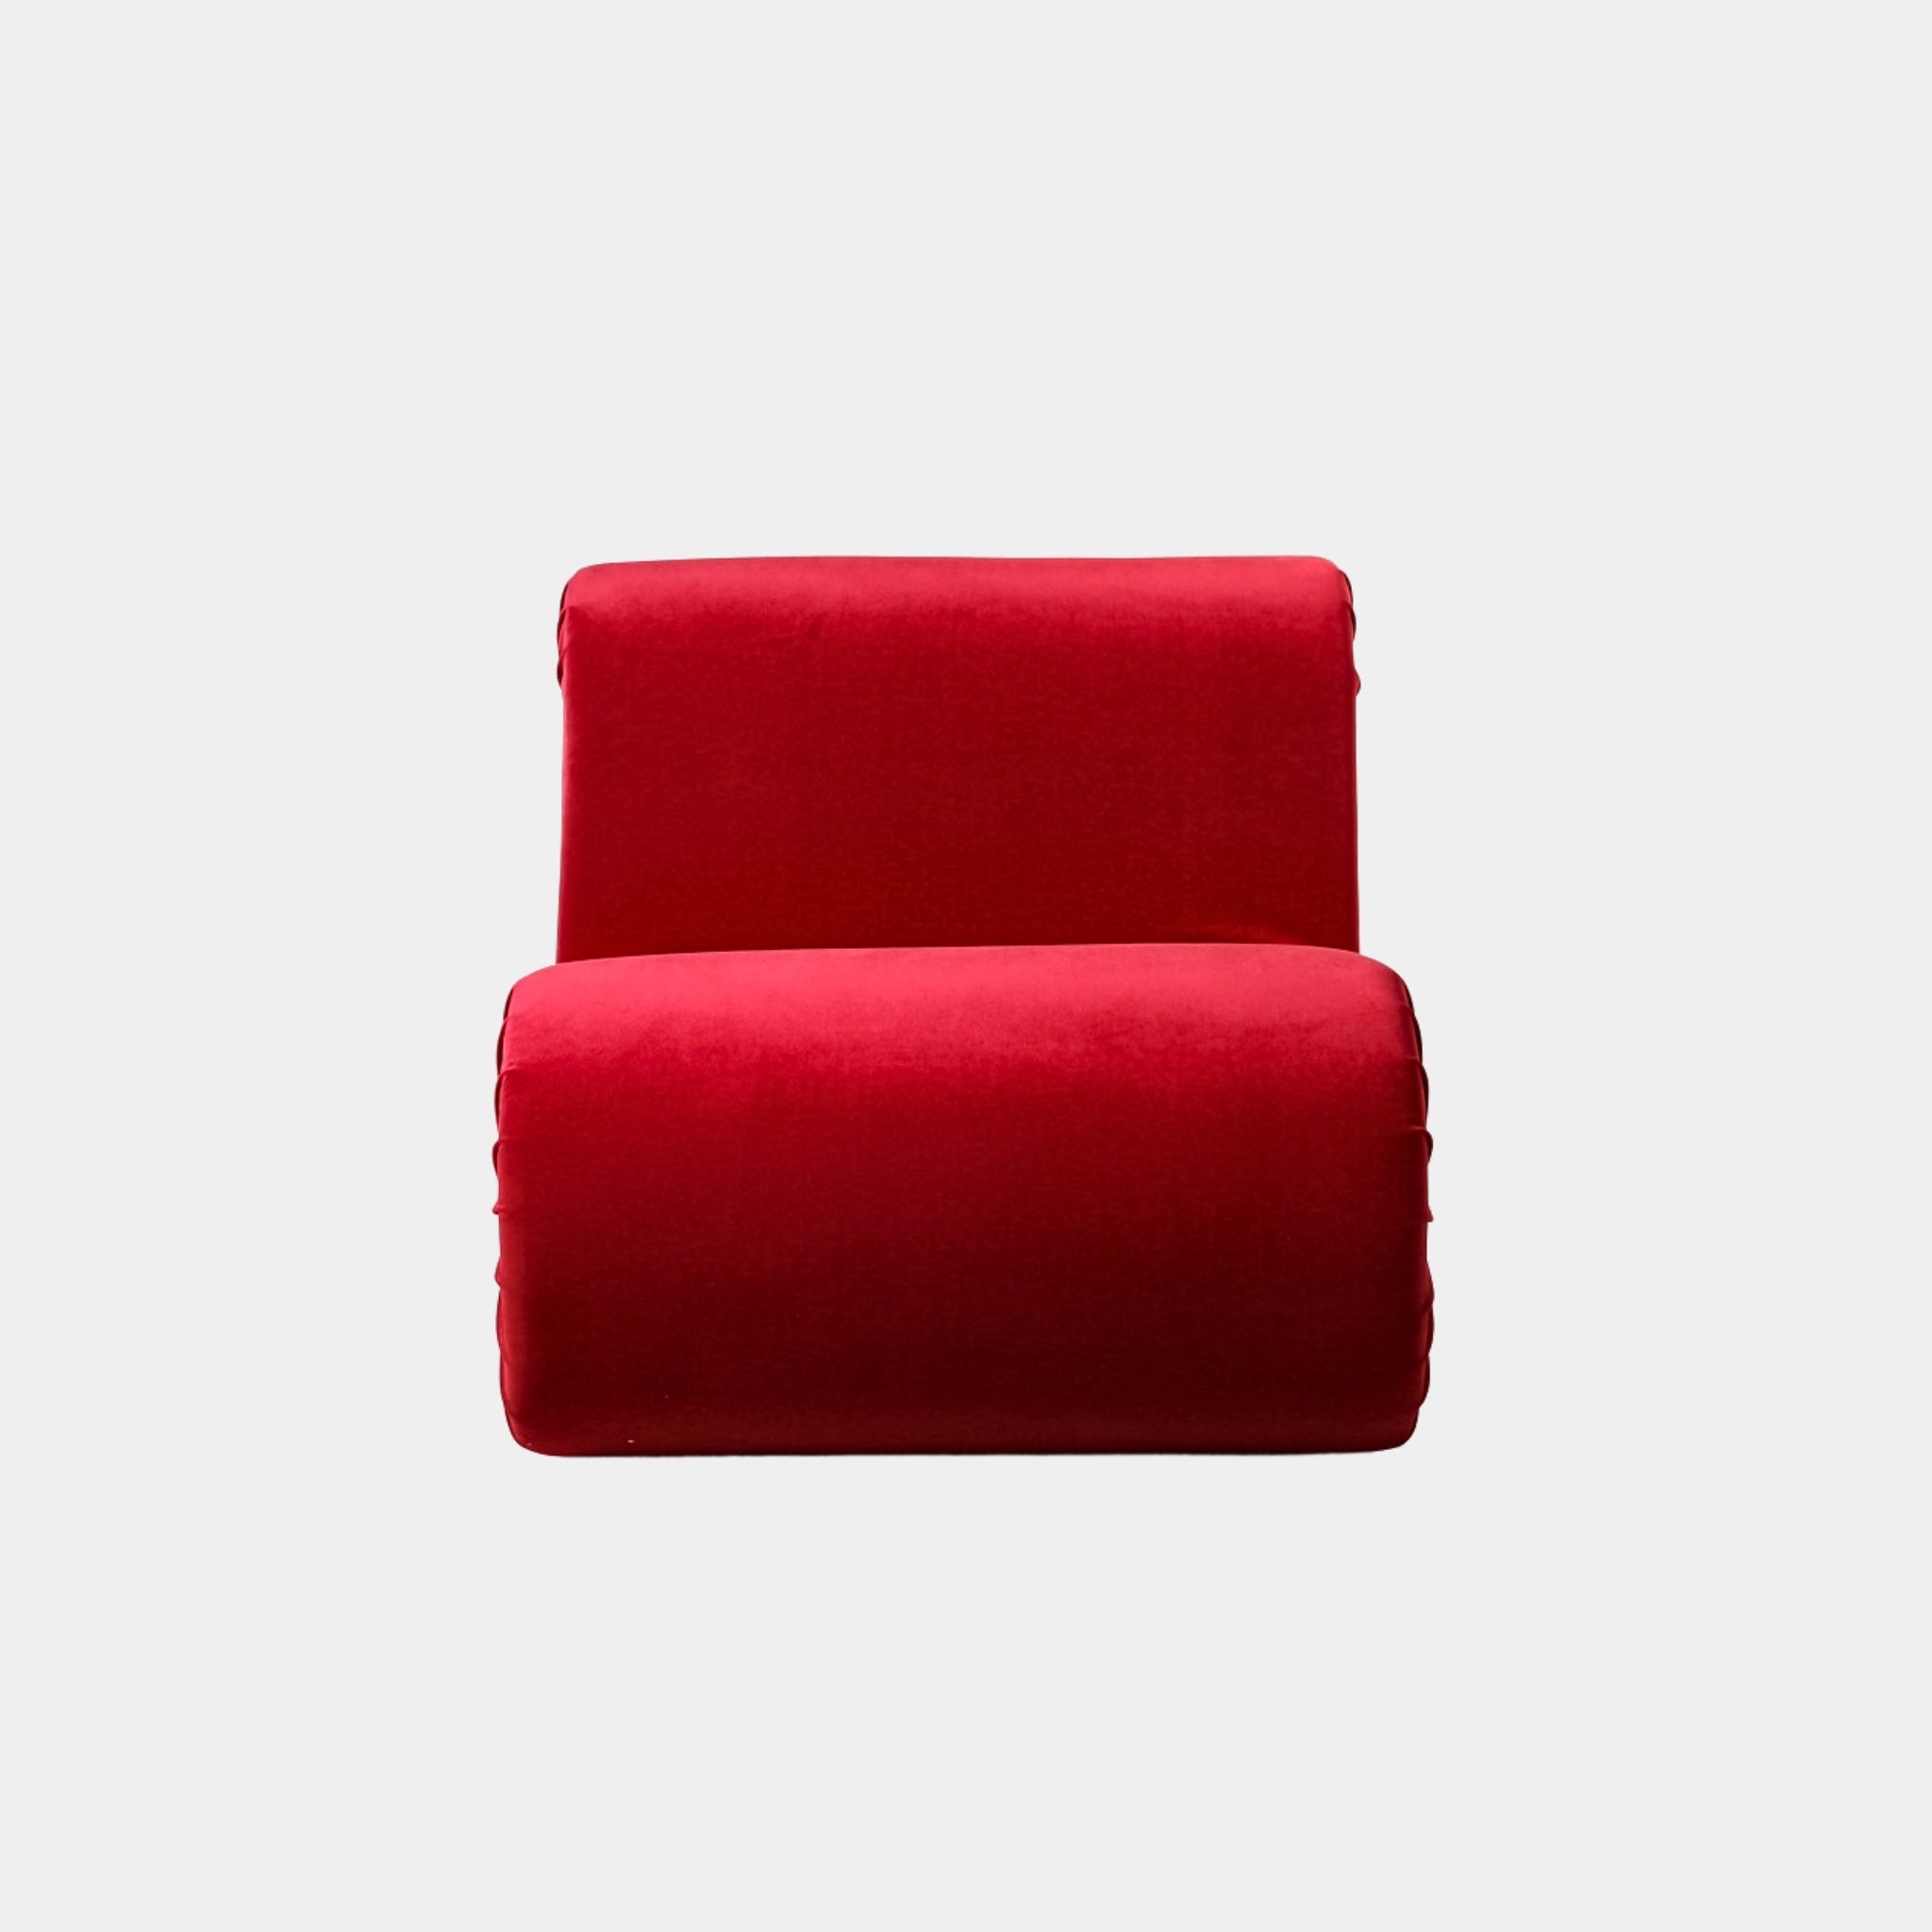 Jellybean Upholstered Chair